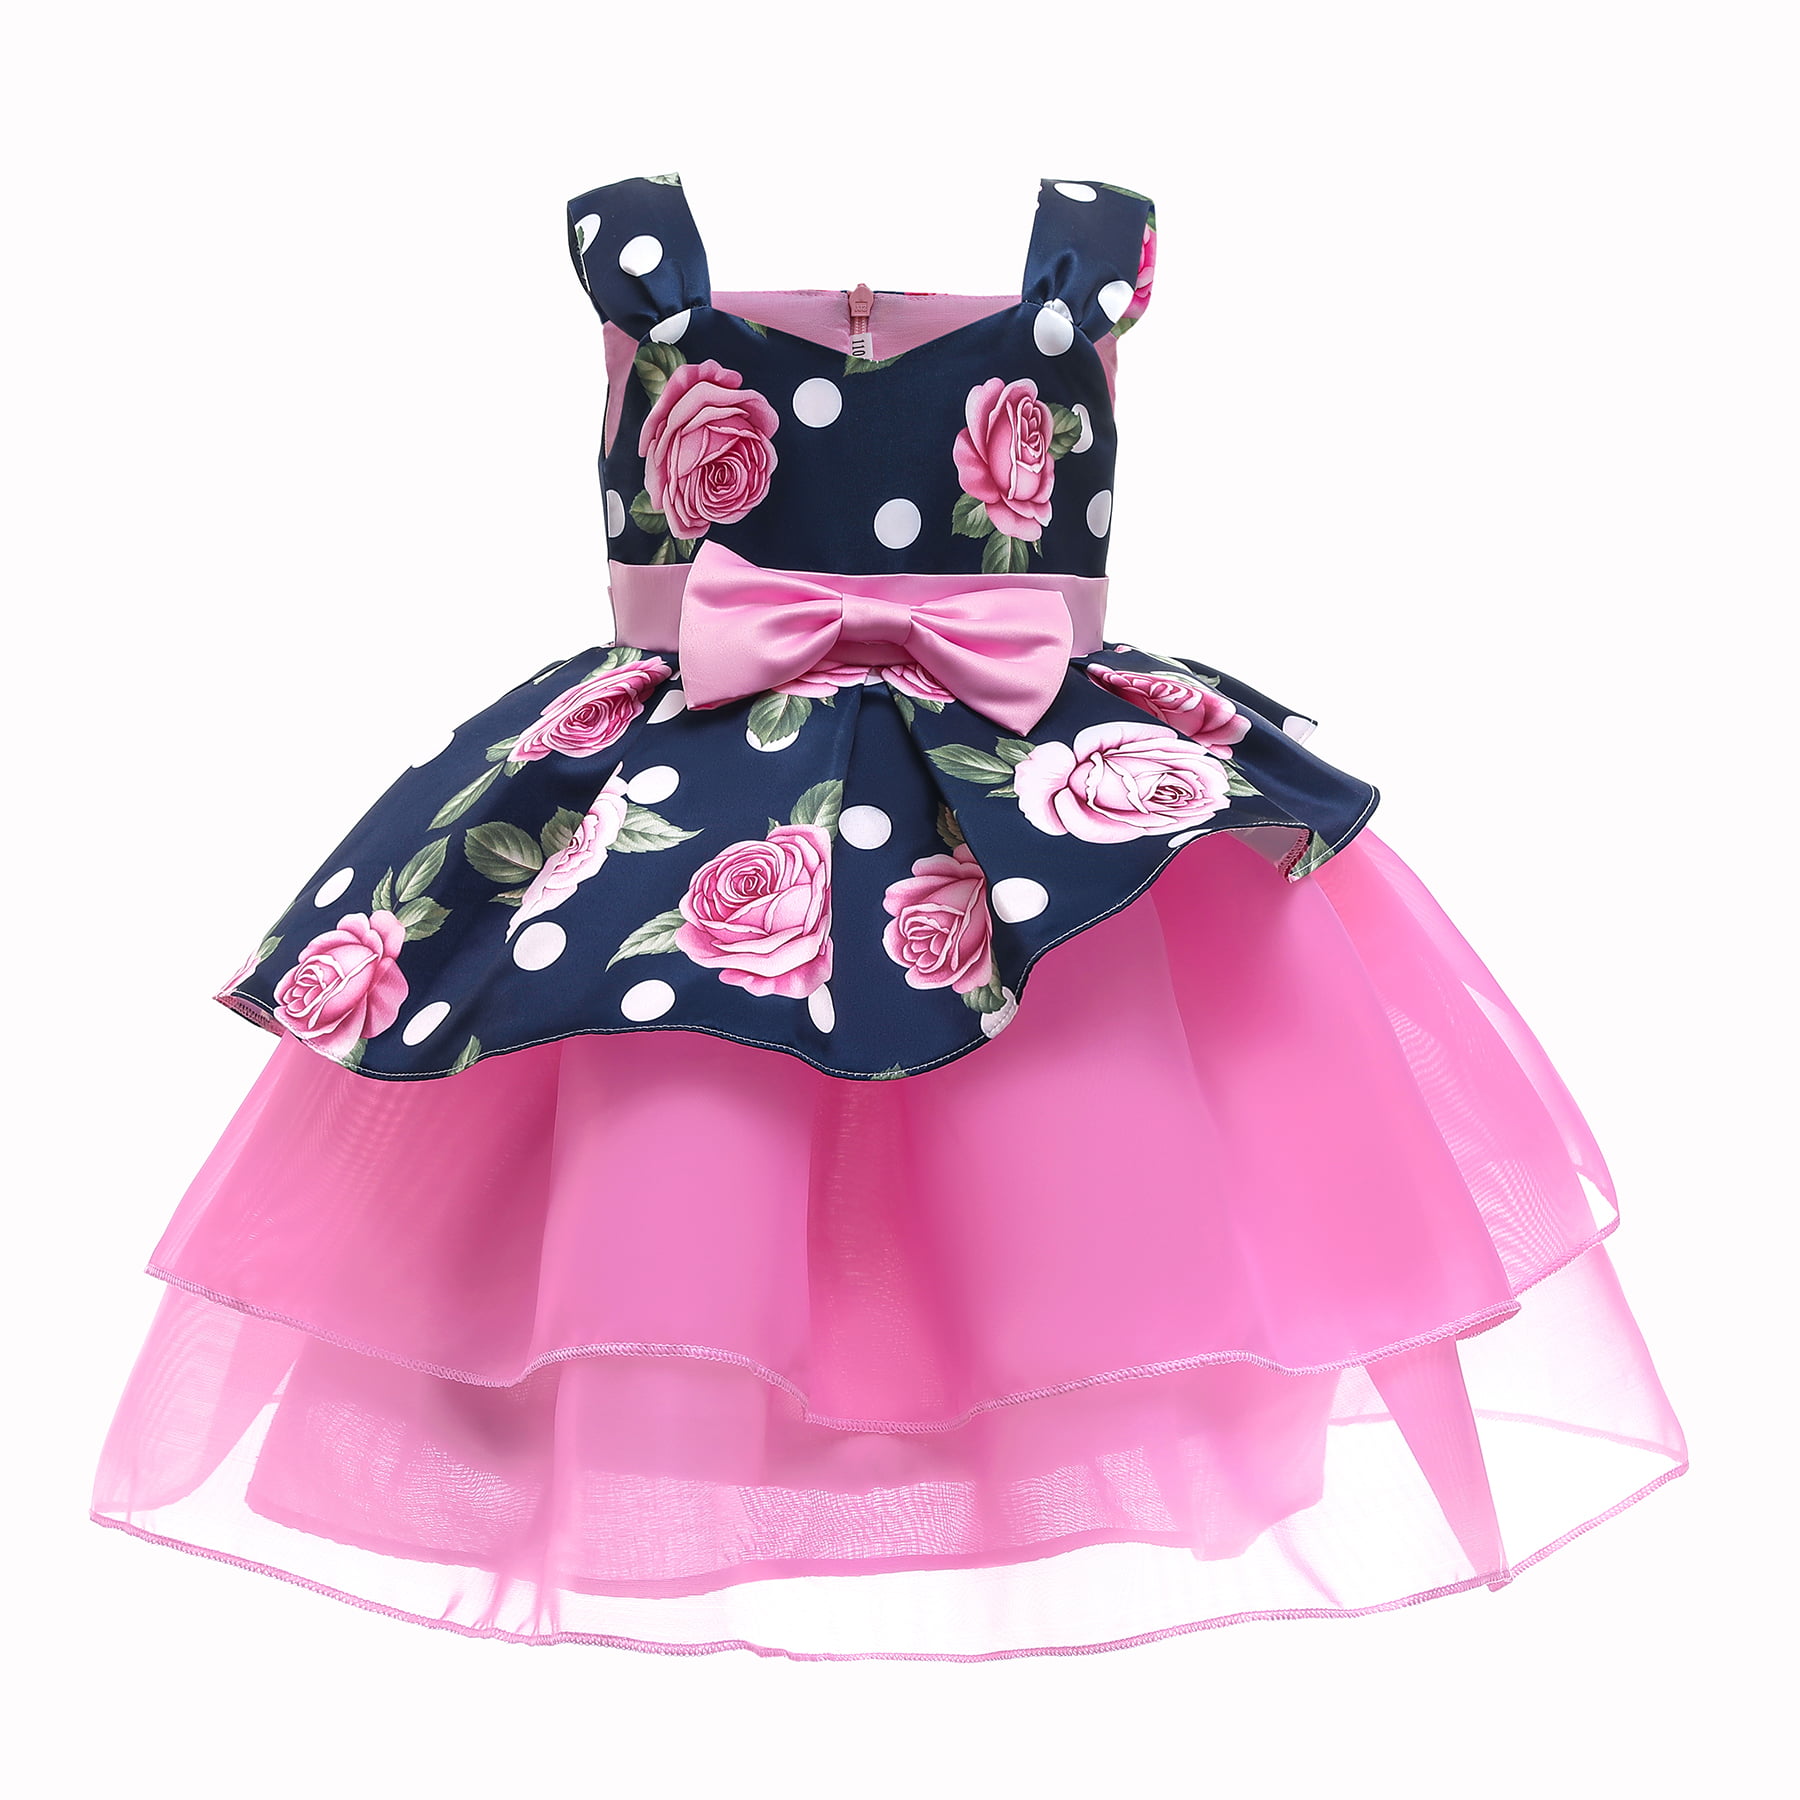 OLLUISNEO 3-4 Years Toddler Baby Girls Dress Suspender Floral Prints Party  Formal TuTu Princess Dress Blue 